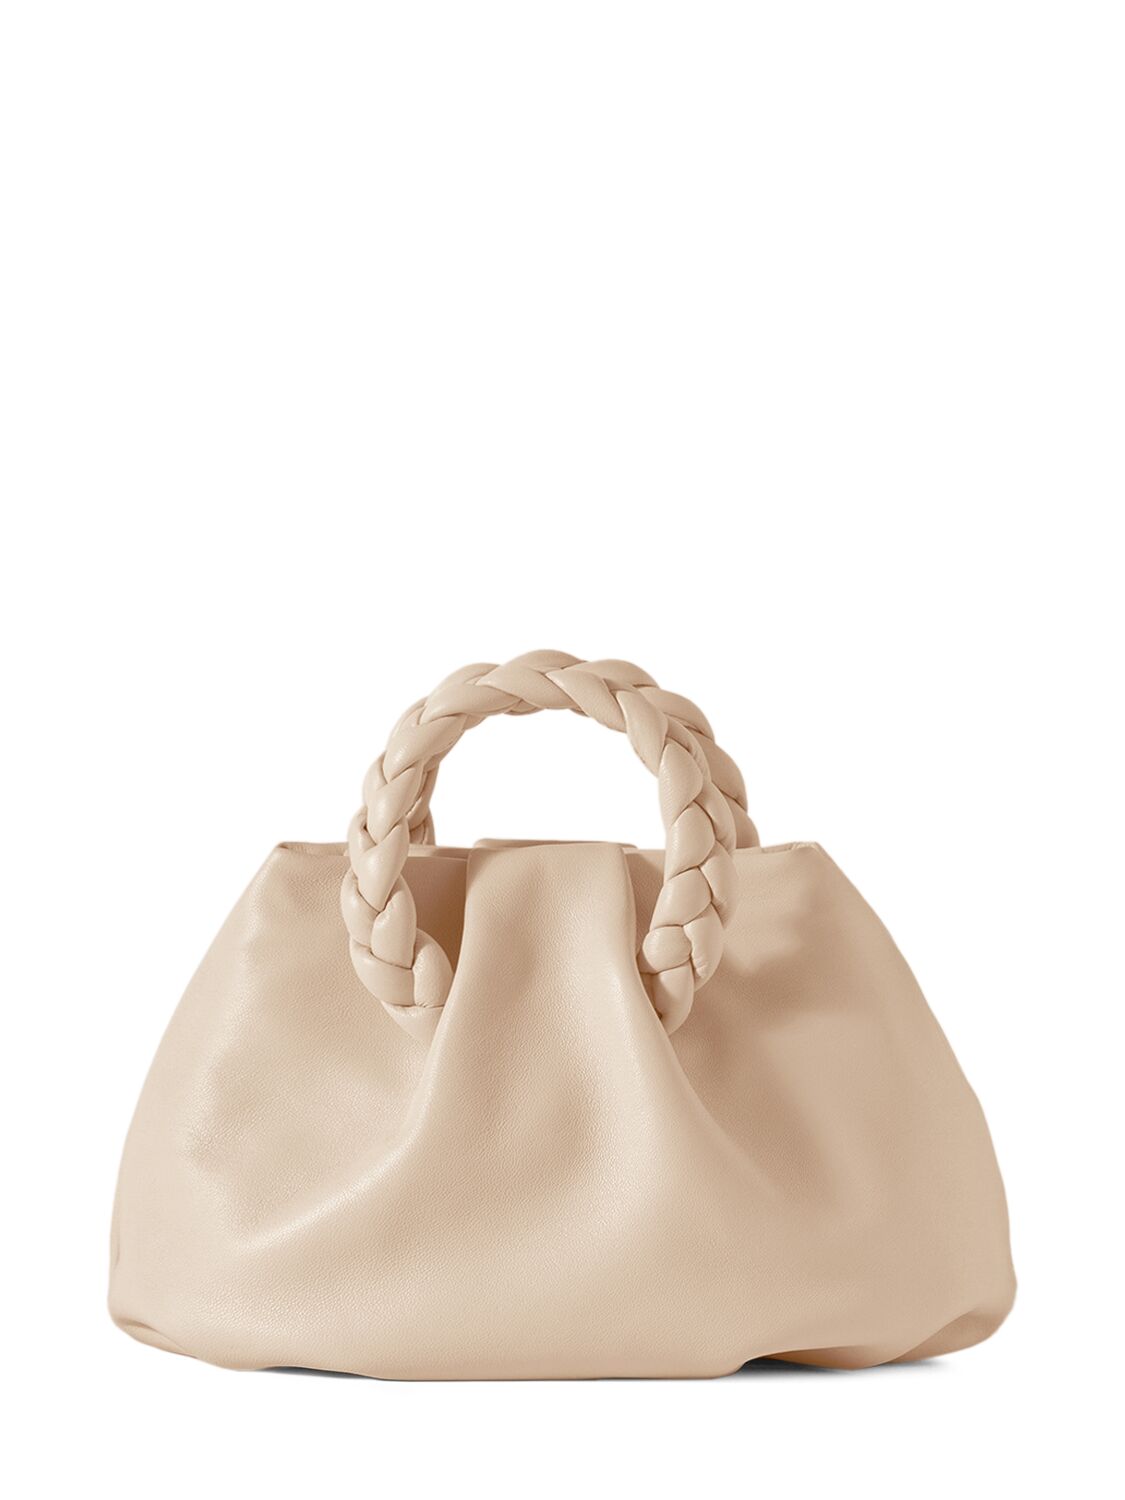 Image of Bombon Leather Top Handle Bag